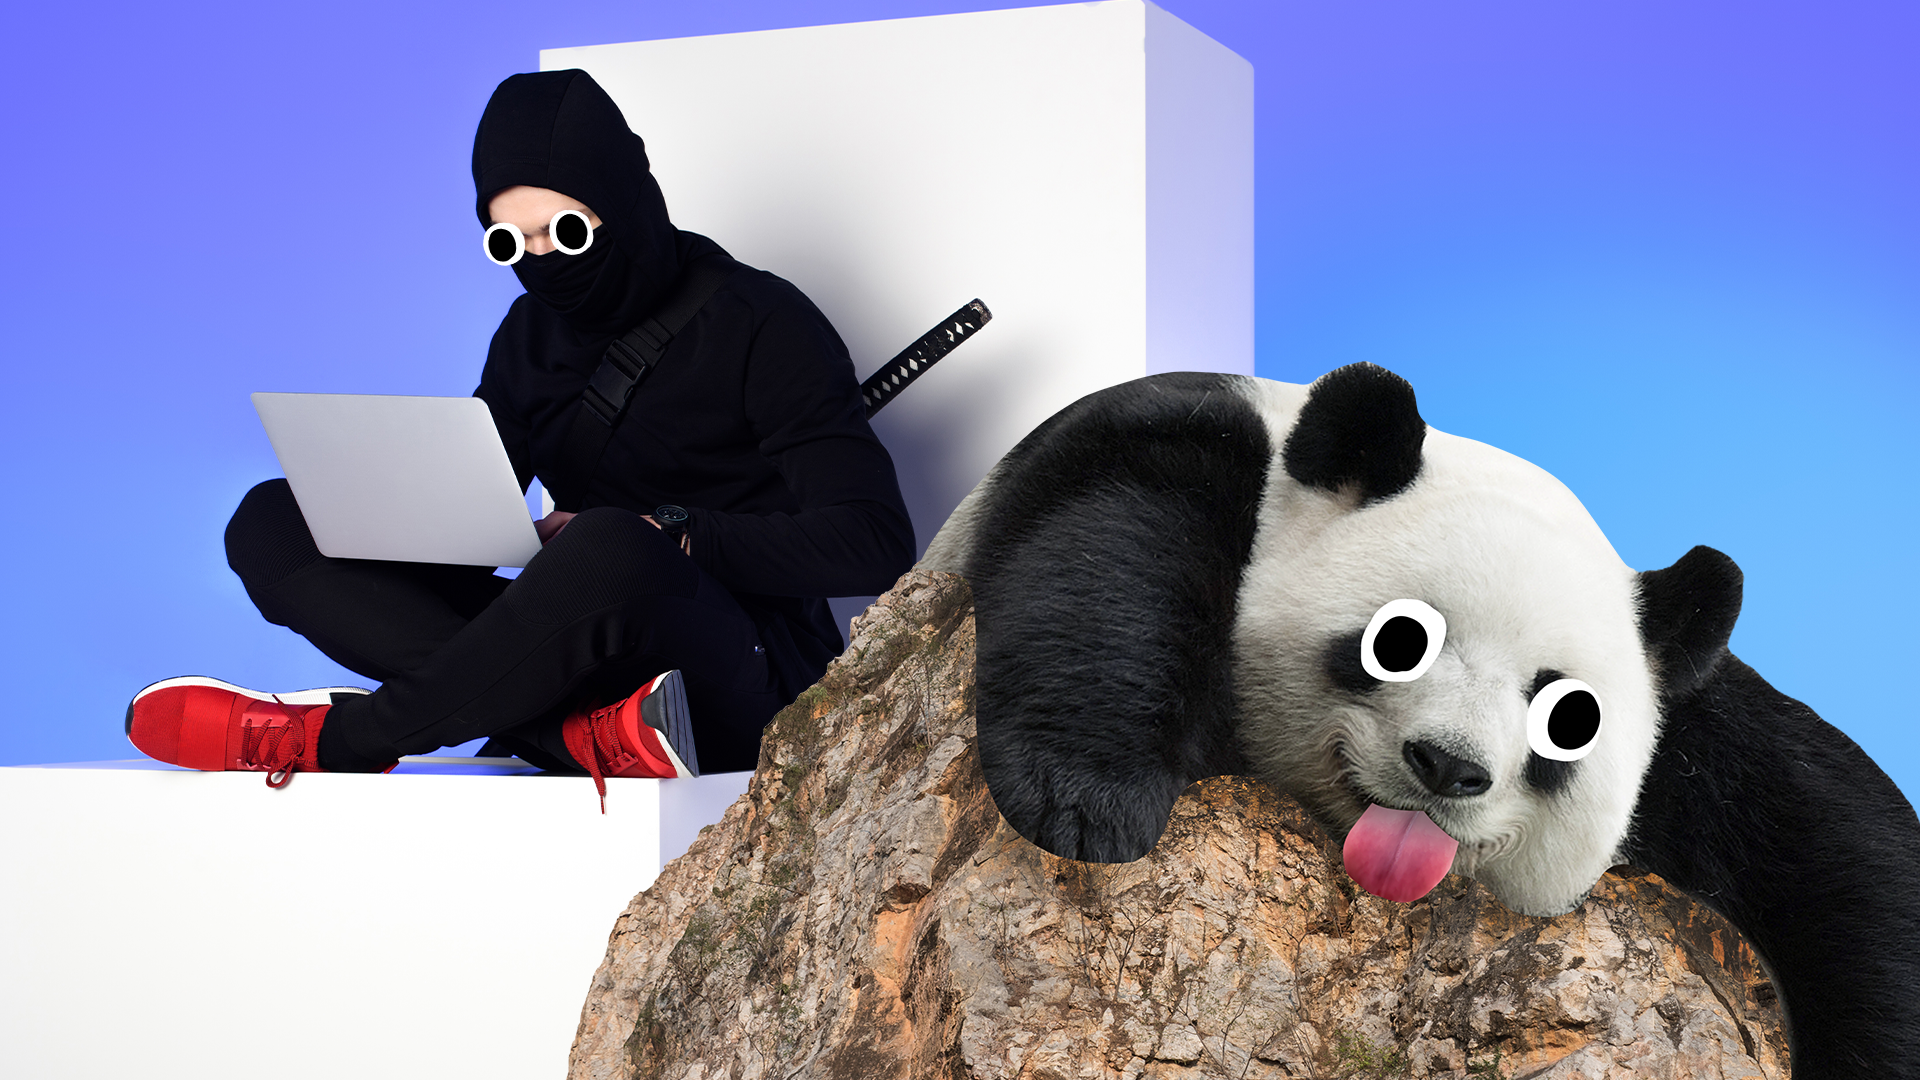 Ninja on laptop with derpy panda